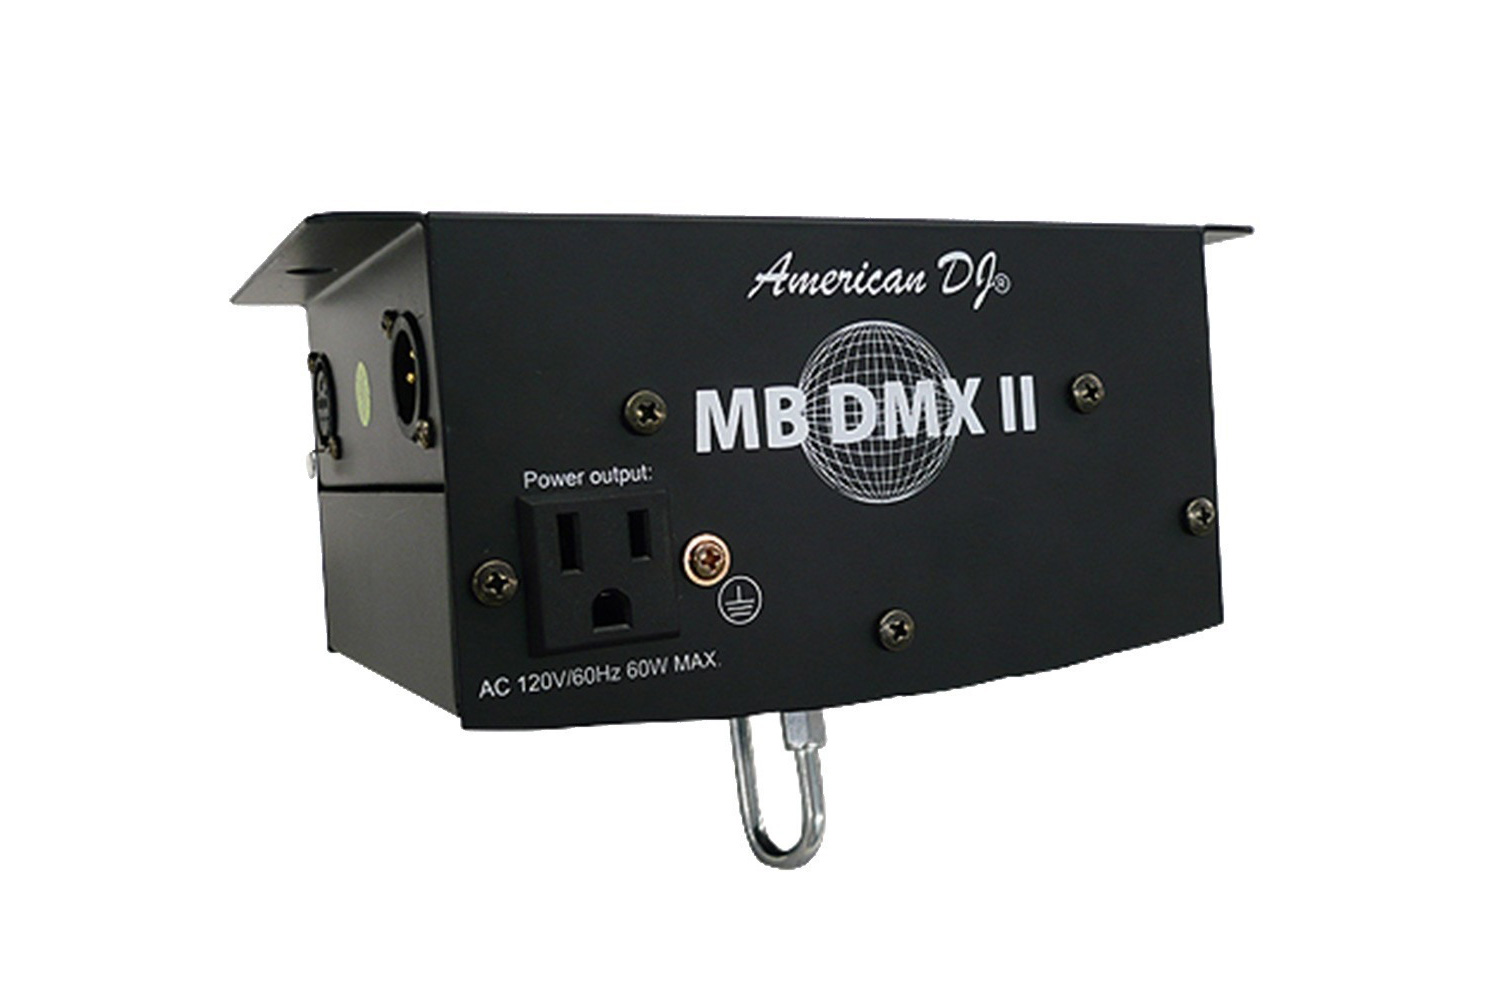 American Dj- MB DMXii - Mirror Ball Motor